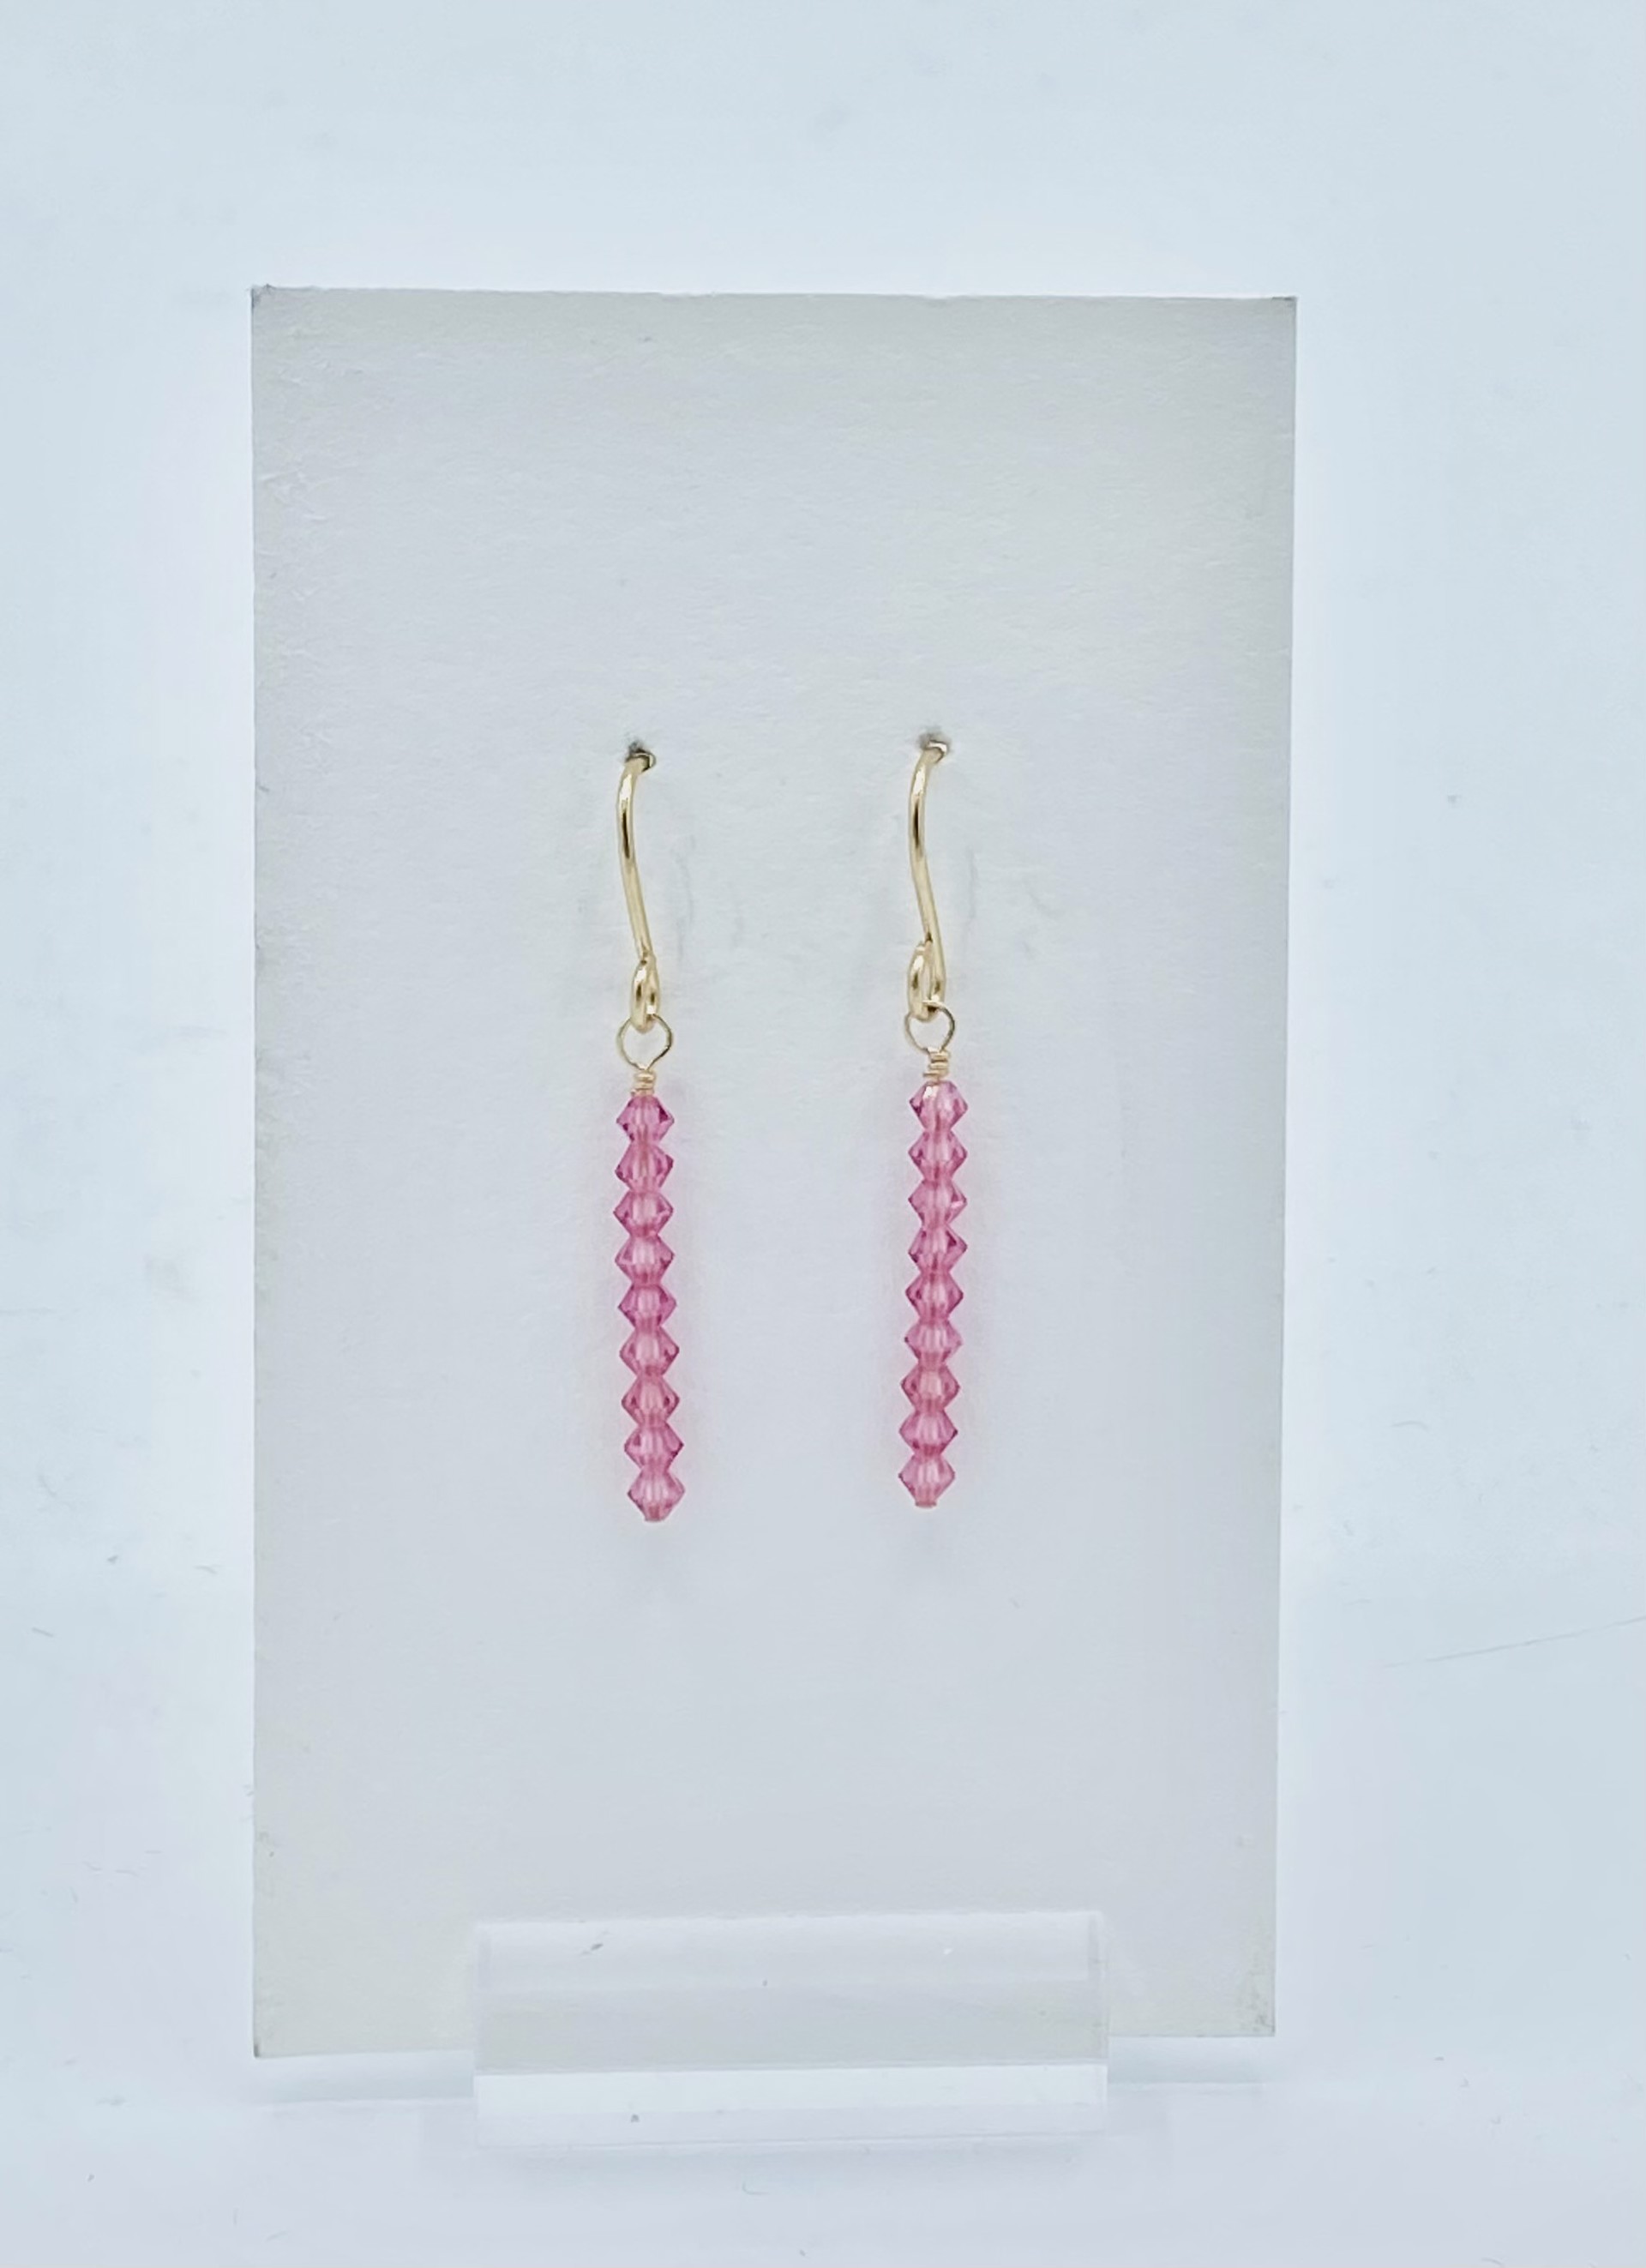 Gold Filled with Pink Swarovski Crystal Earrings by Emelie Hebert